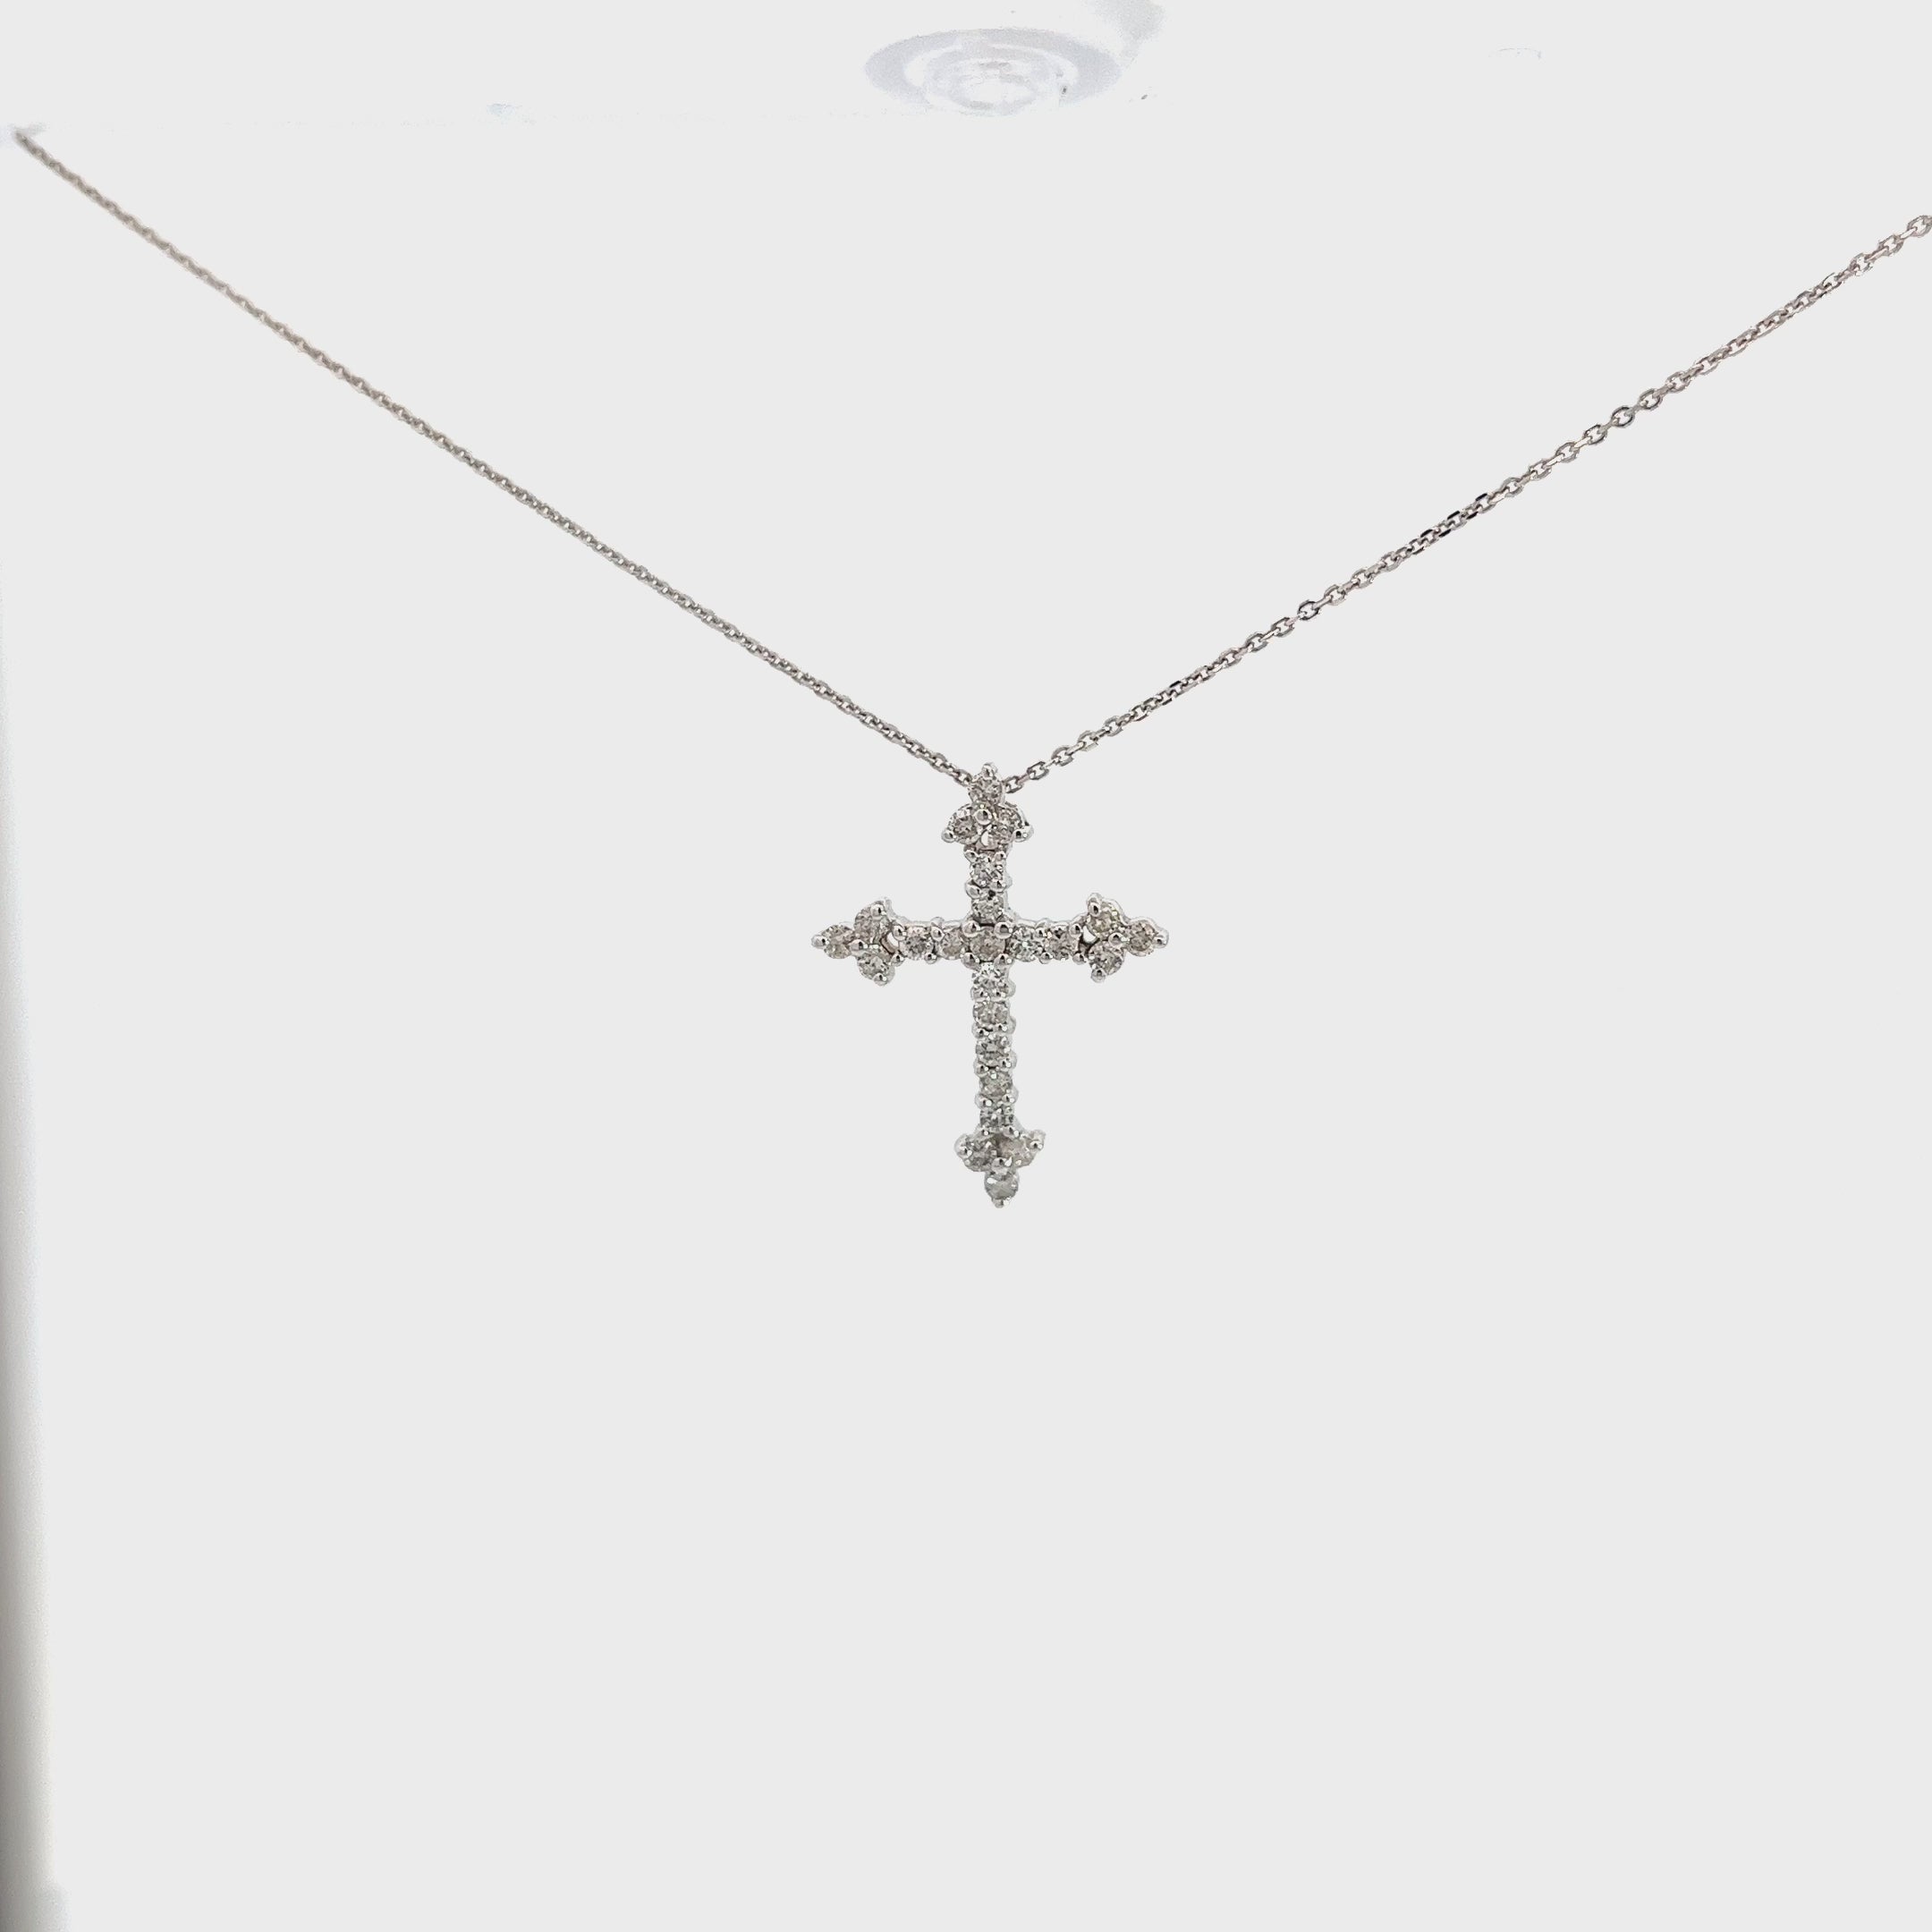 Ladies 14k white gold Diamond cross necklace